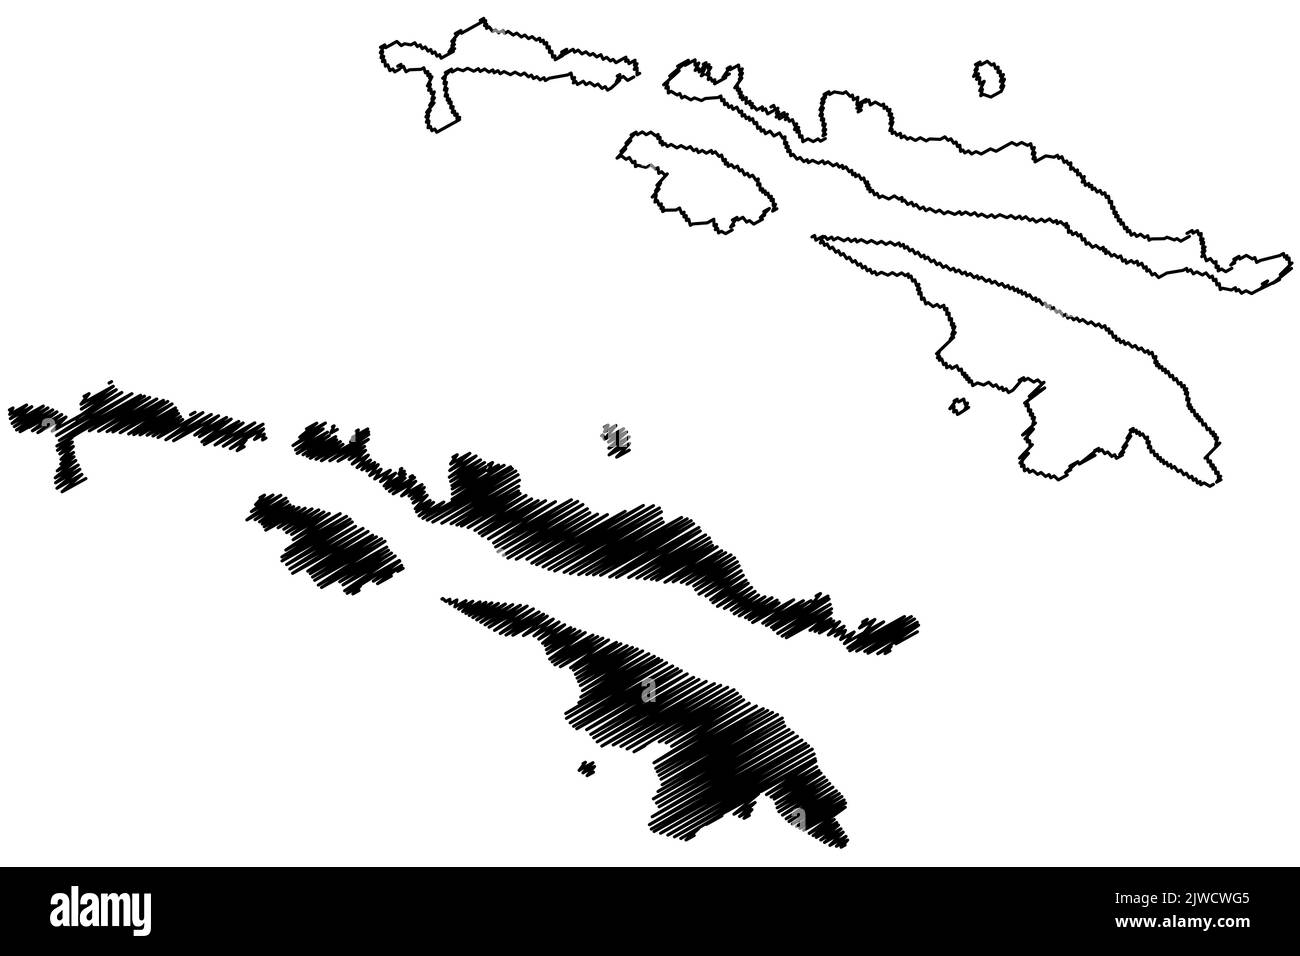 Admiral, Fraser, Bruen and King Hall island (Western Australia, Commonwealth of Australia, Buccaneer Archipelago, Indian Ocean) map vector illustratio Stock Vector